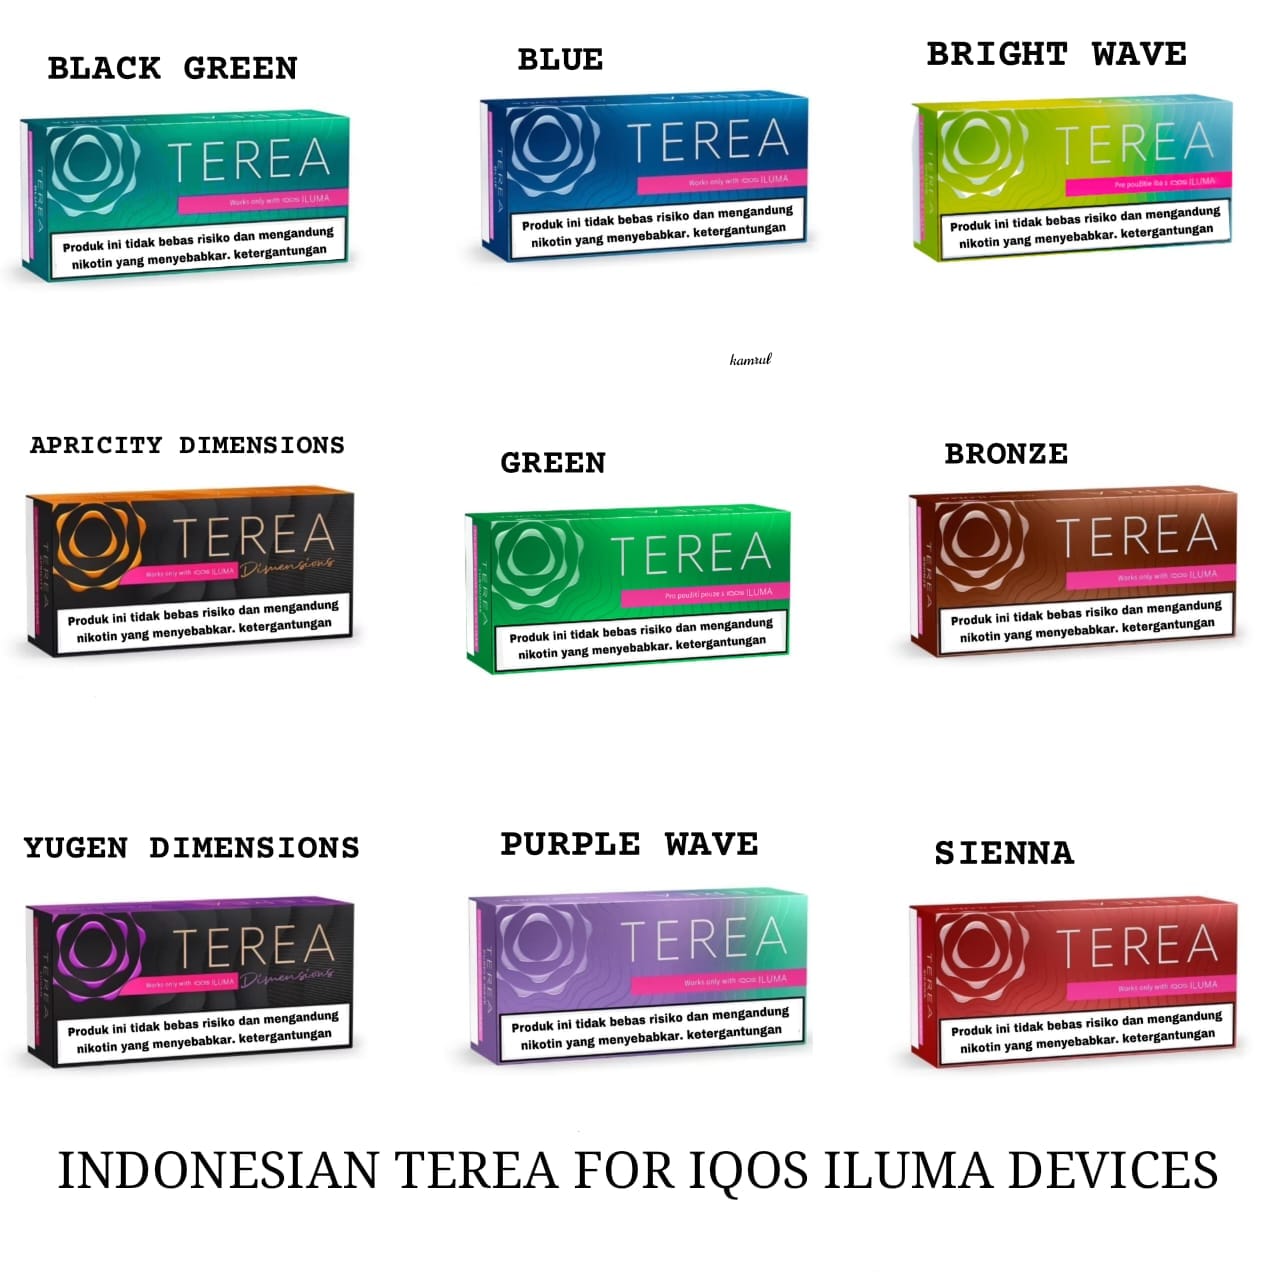 New IQOS Terea Indonesian (Terea Black Green) Best Price in UAE – HETTS DXB